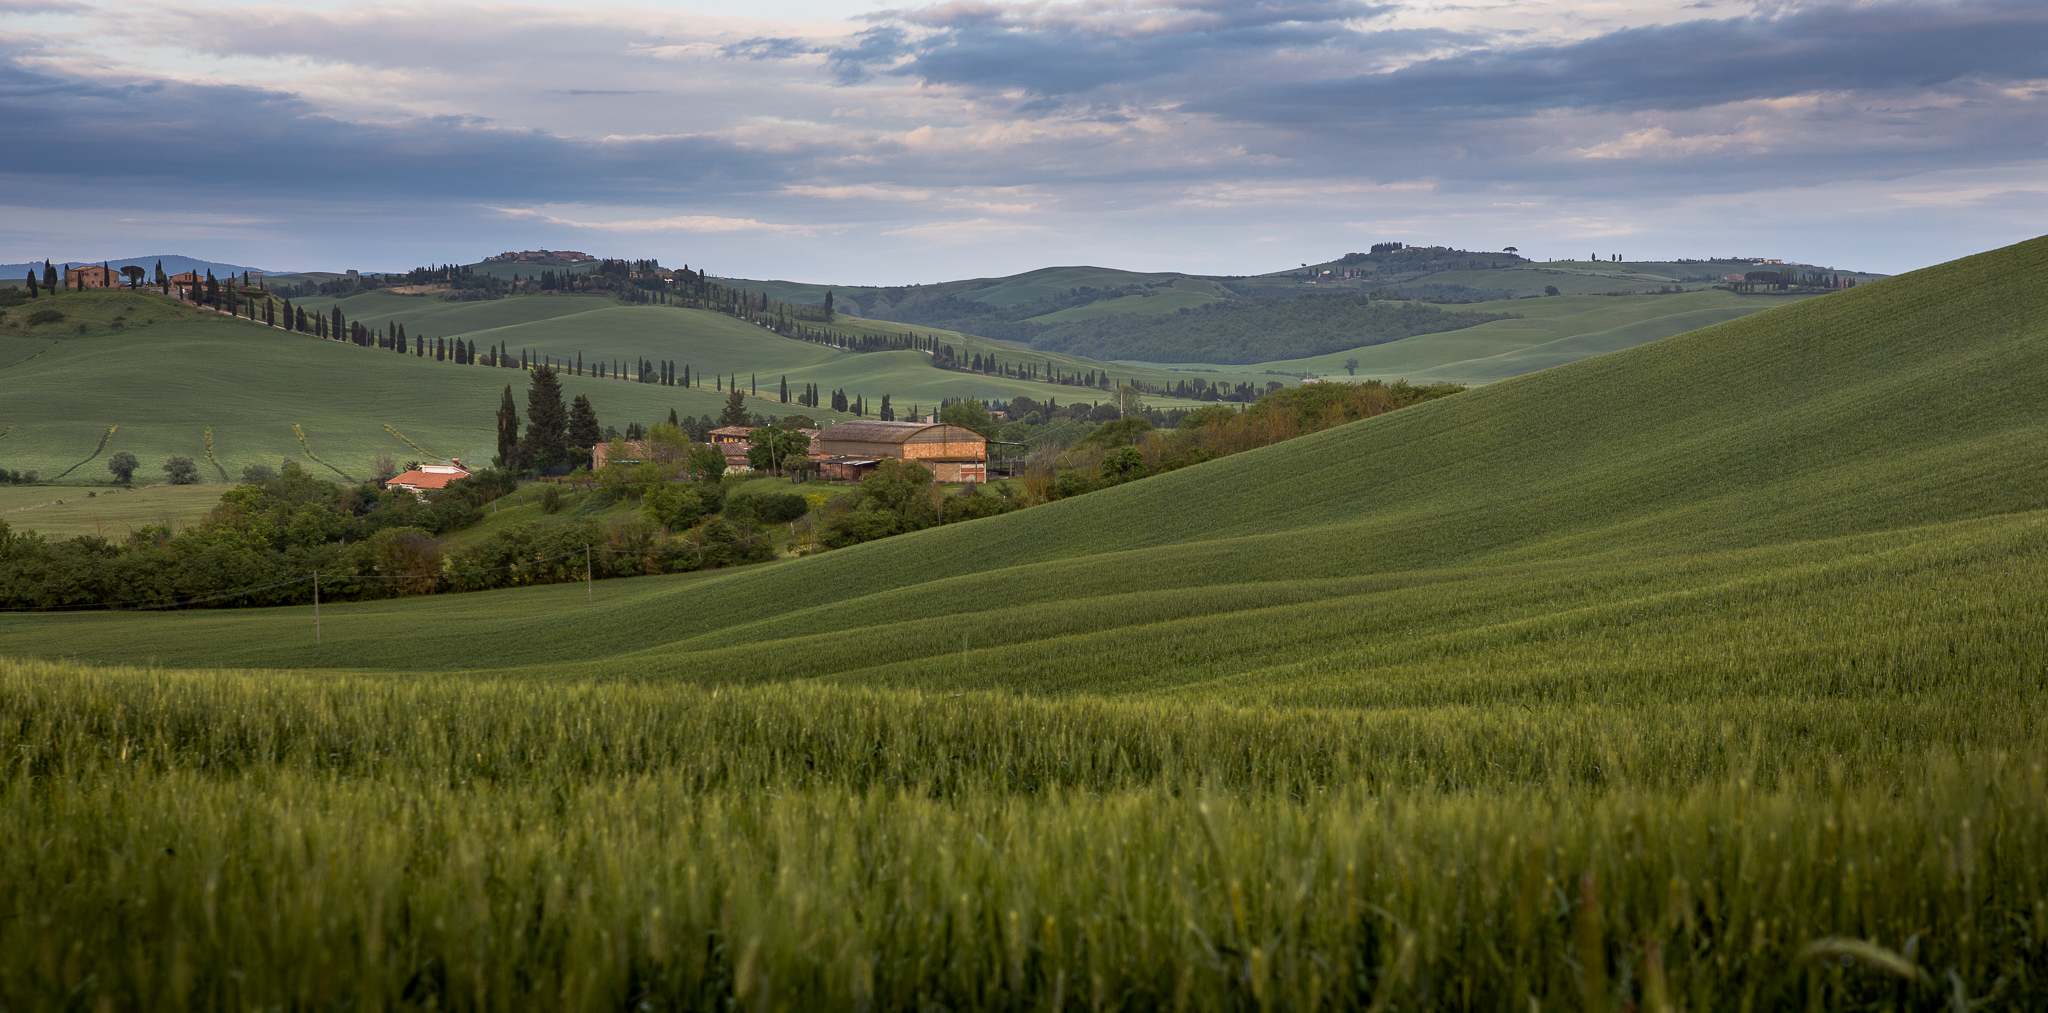 Wheat fields in the Sienese countryside...